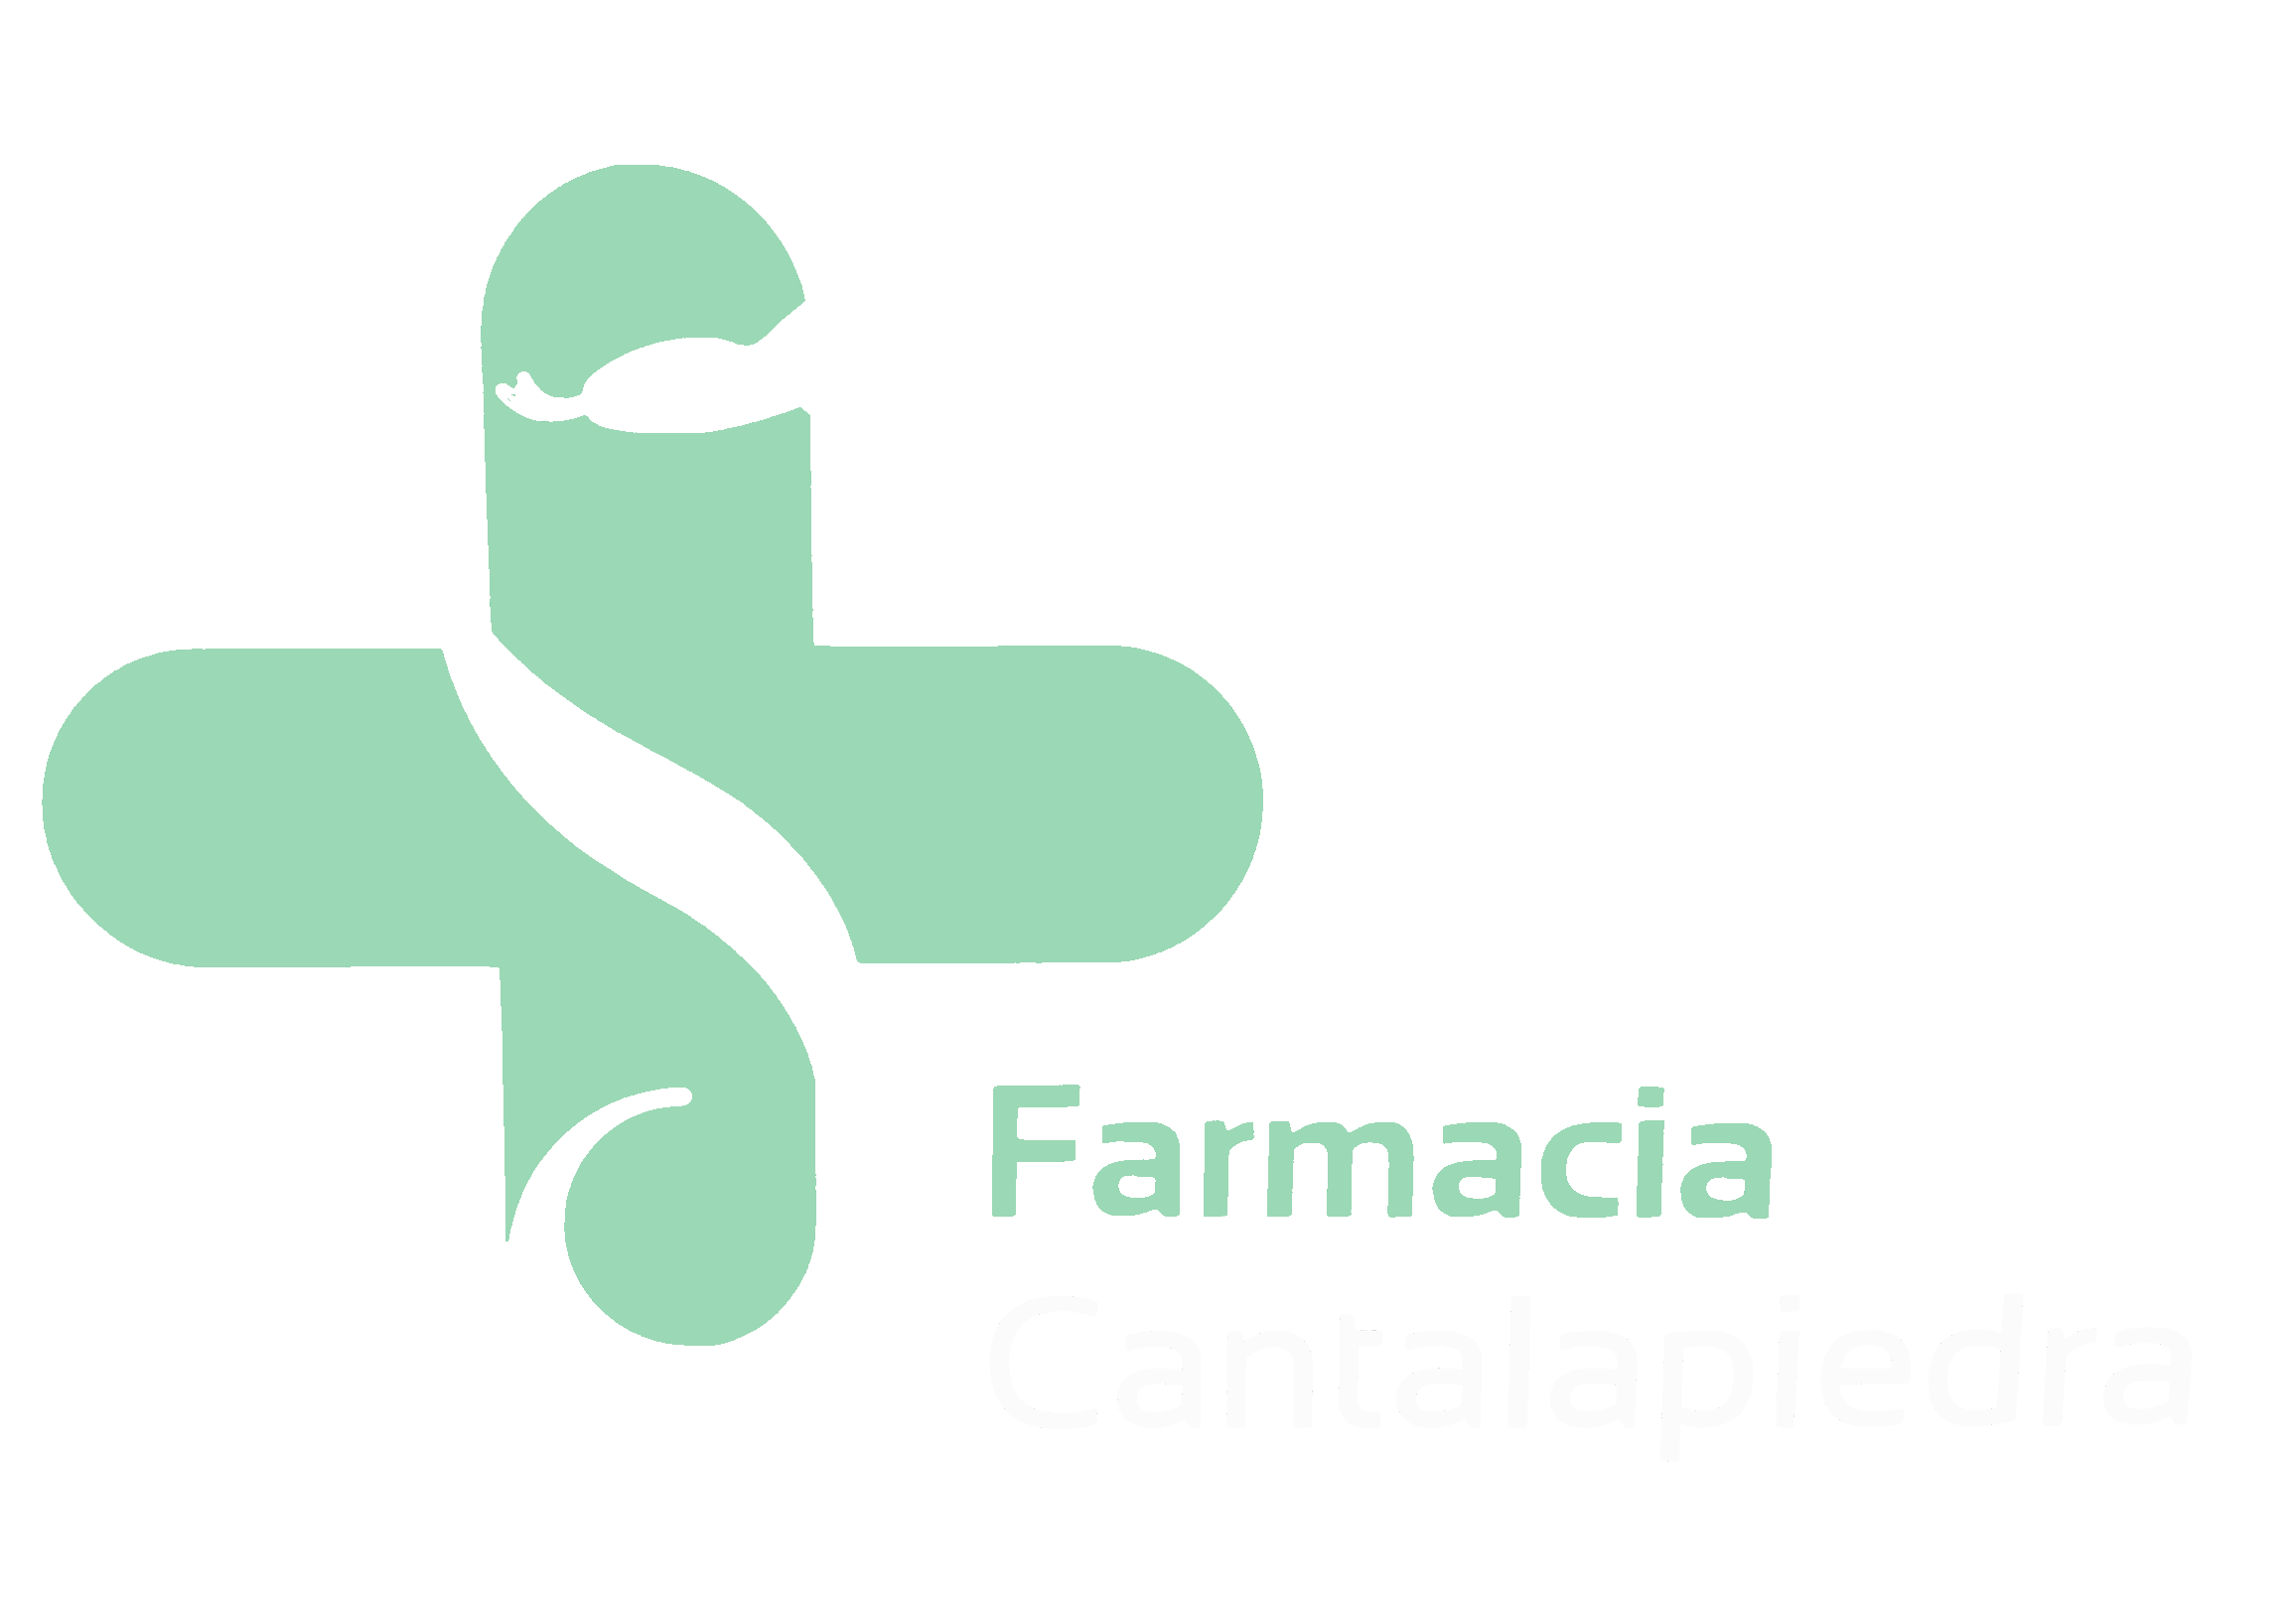 Farmacia Lda. Miriam Cantalapiedra logo